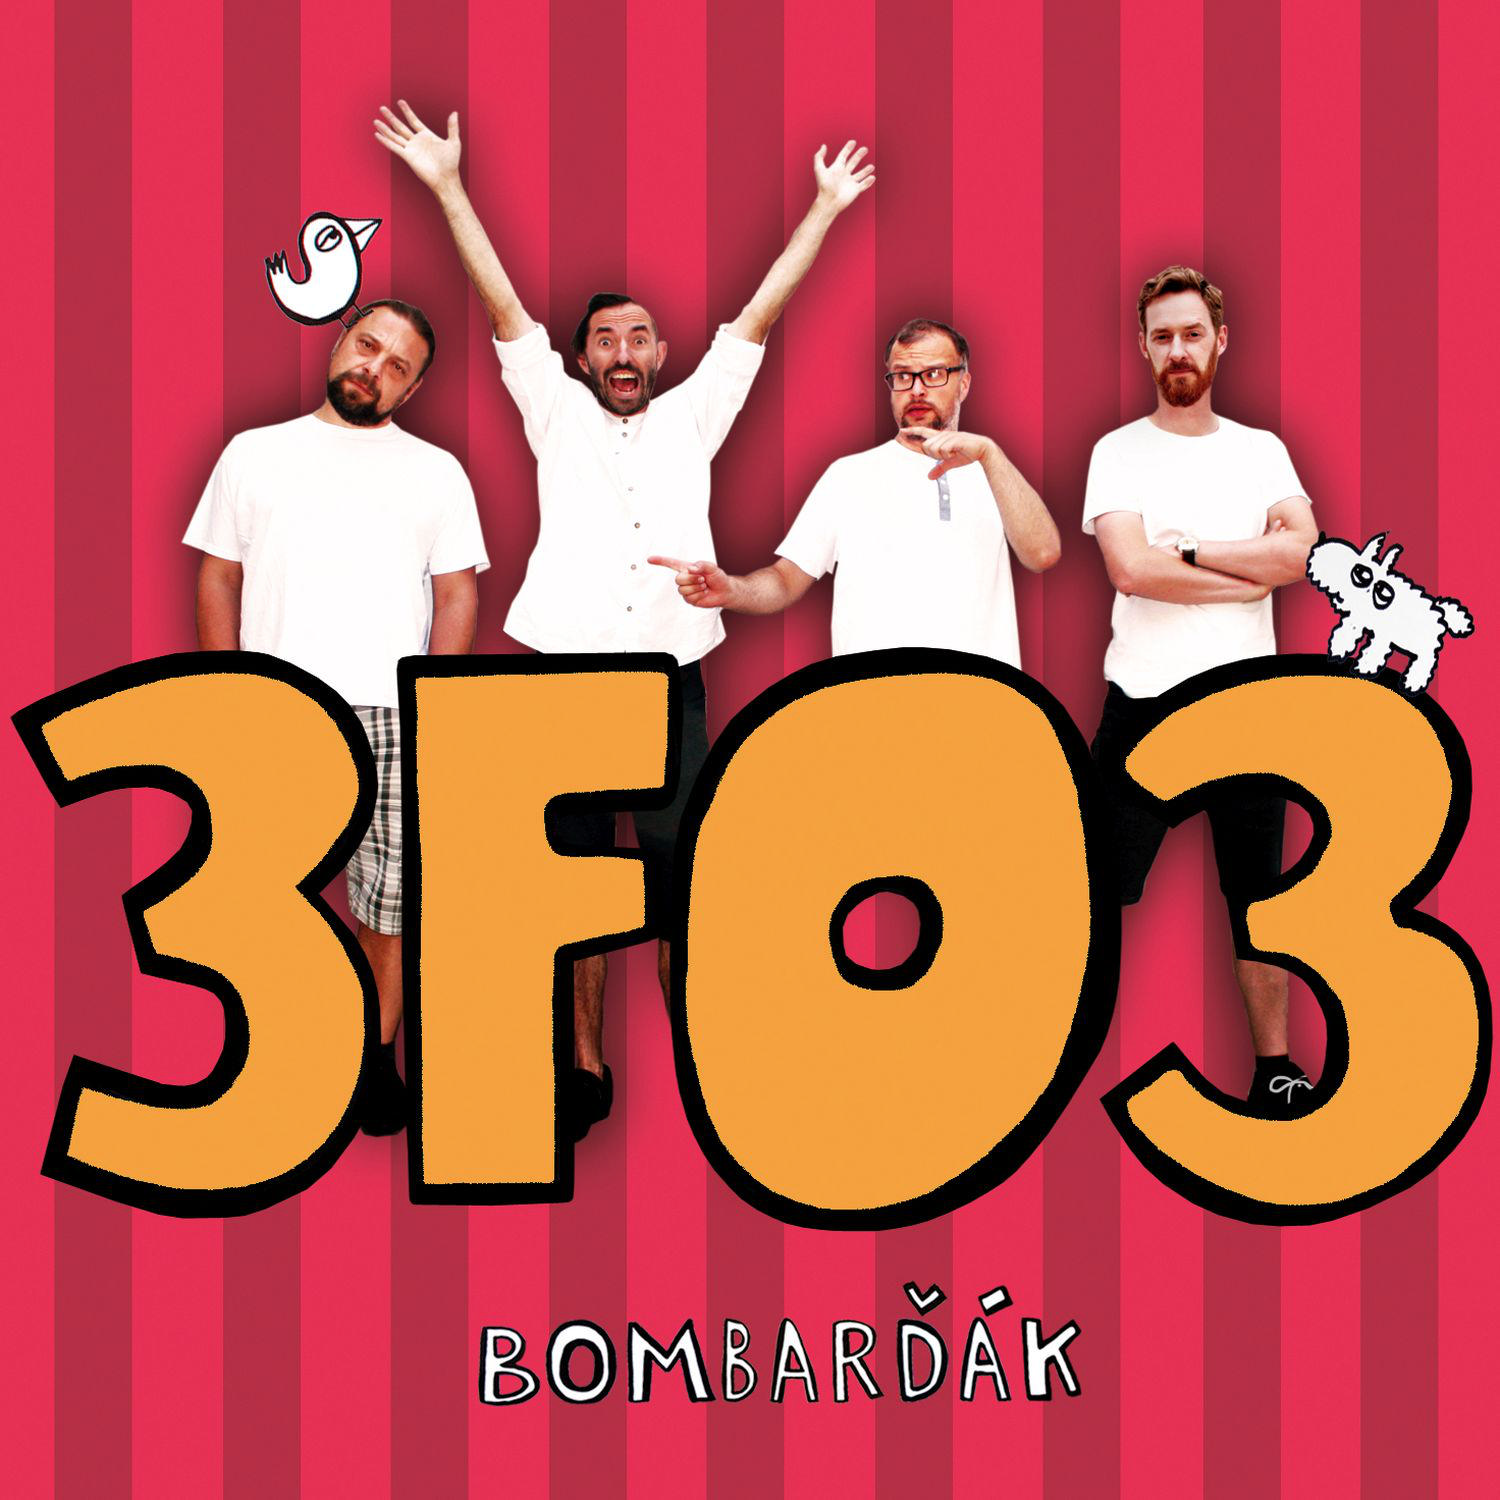 CD Shop - BOMBARDAK 3FO3